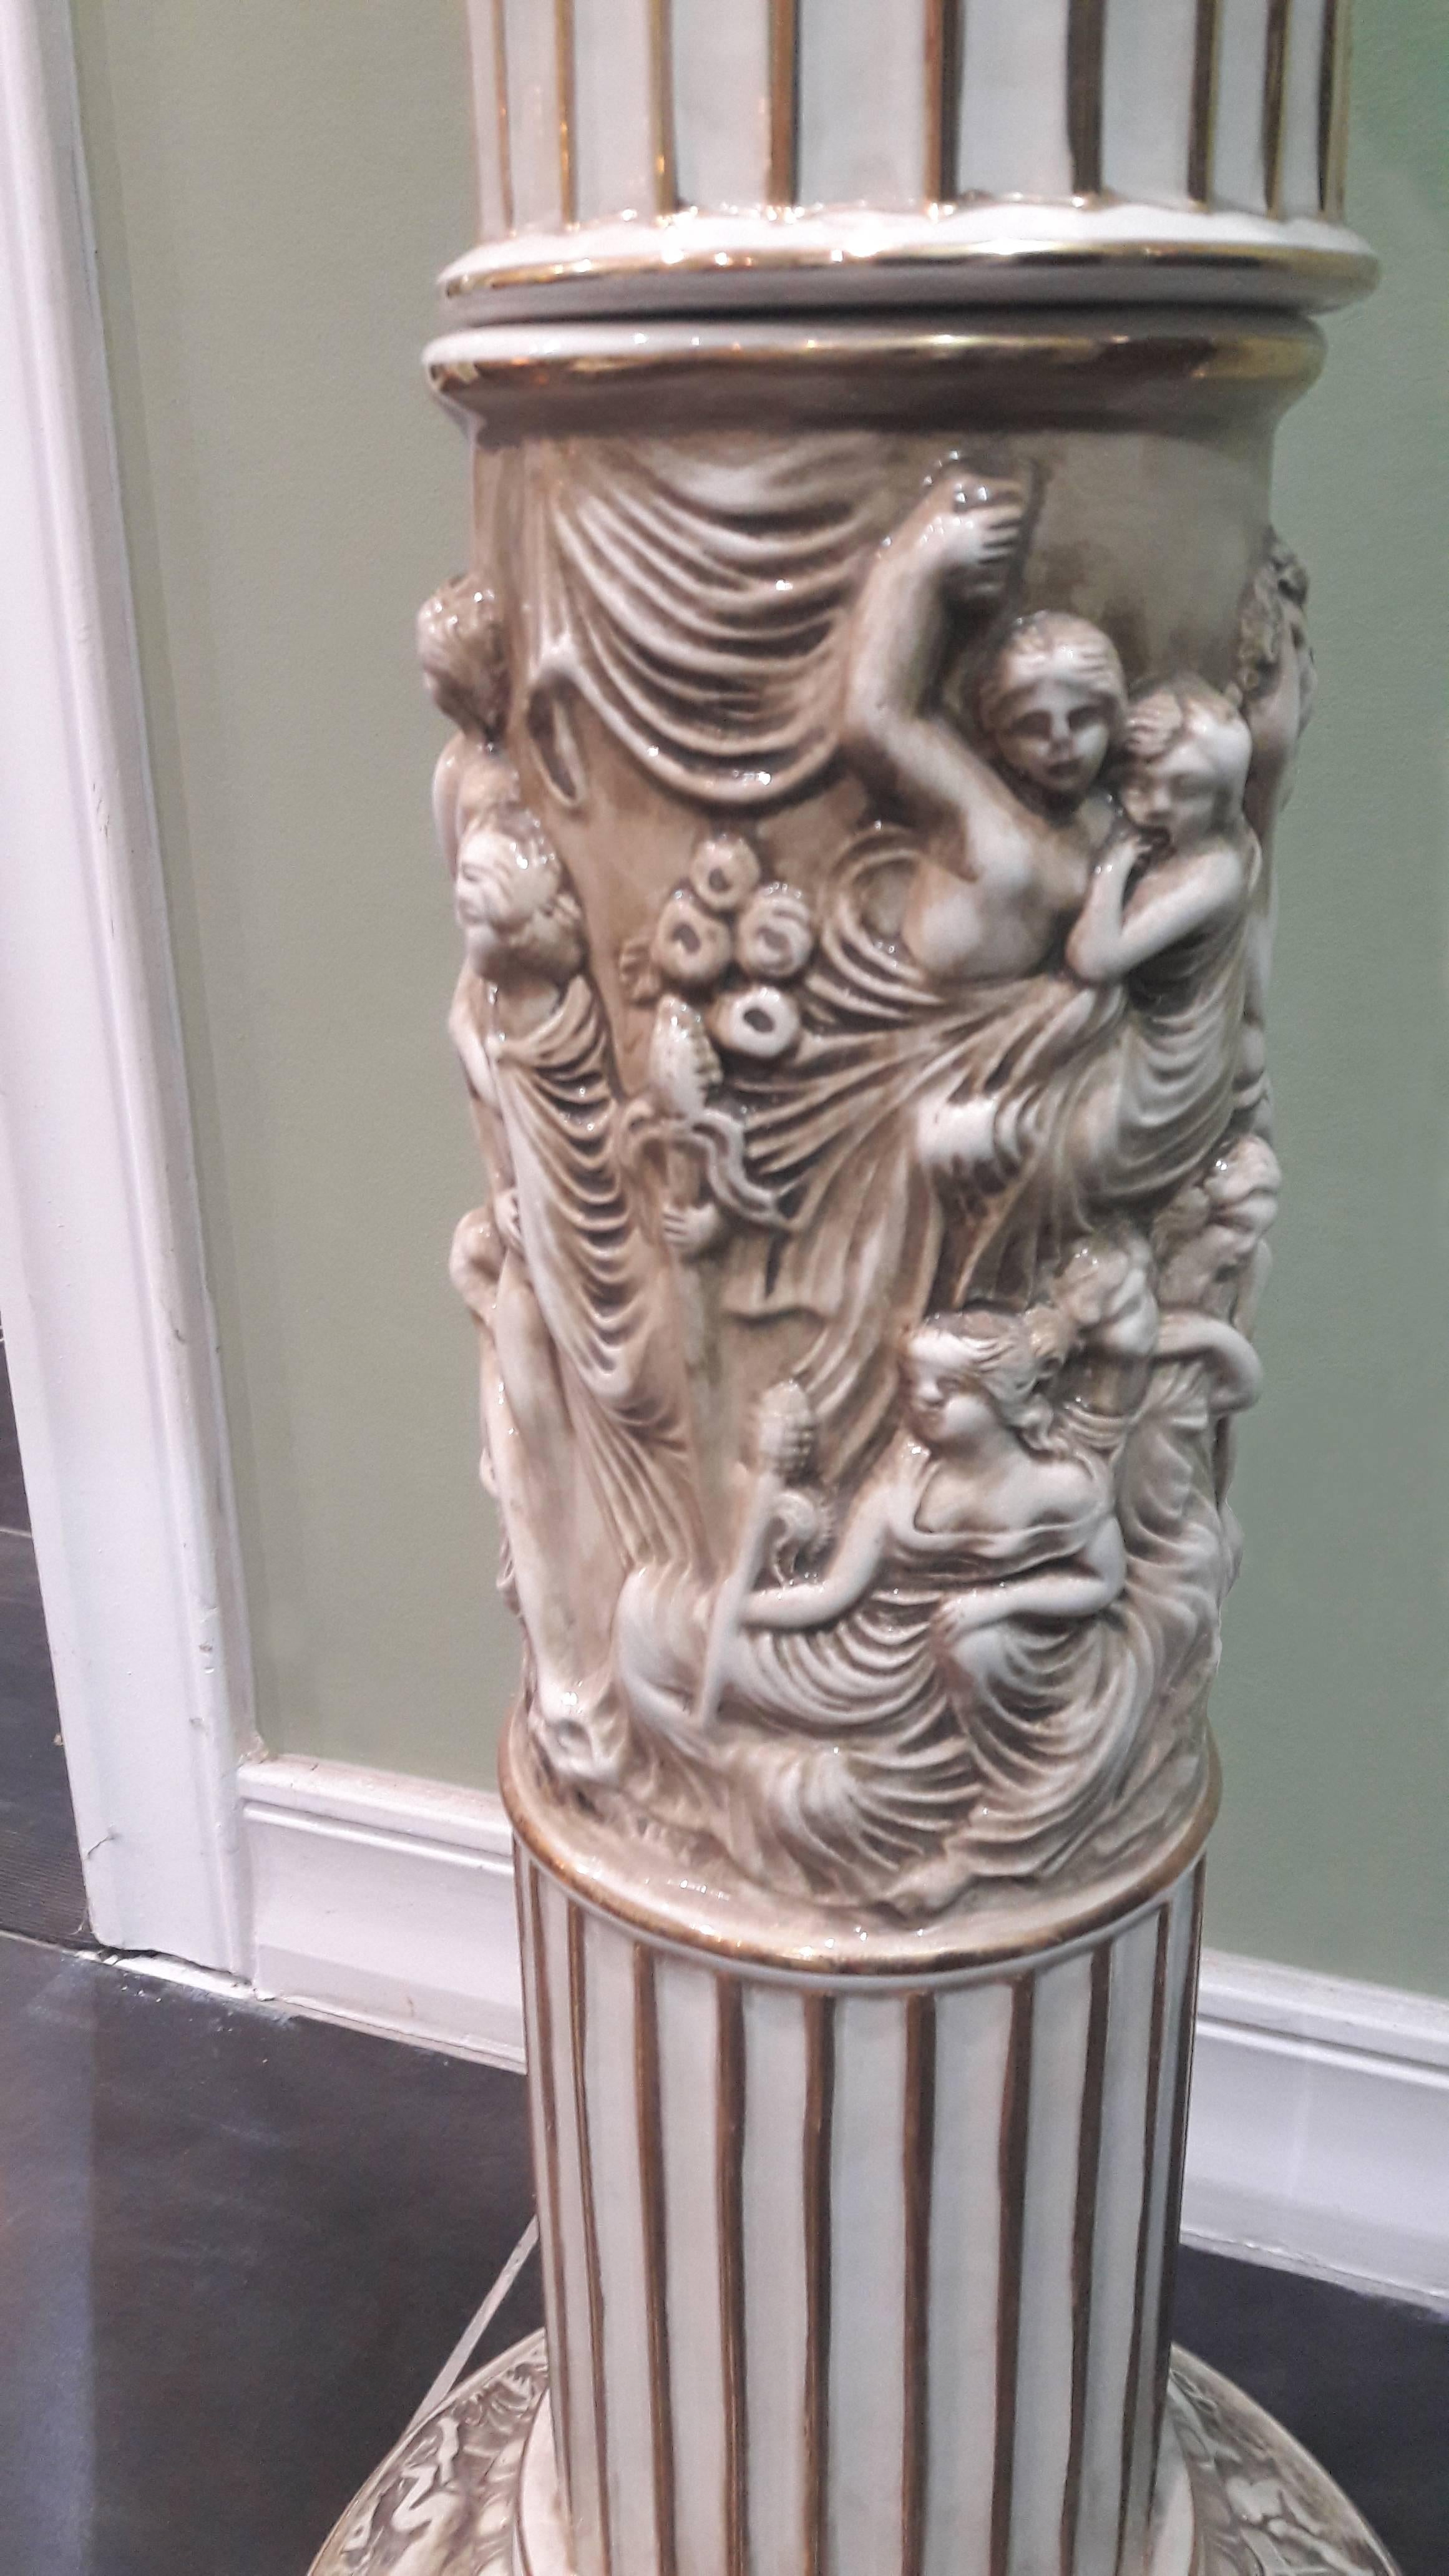 capodimonte pedestal and vase